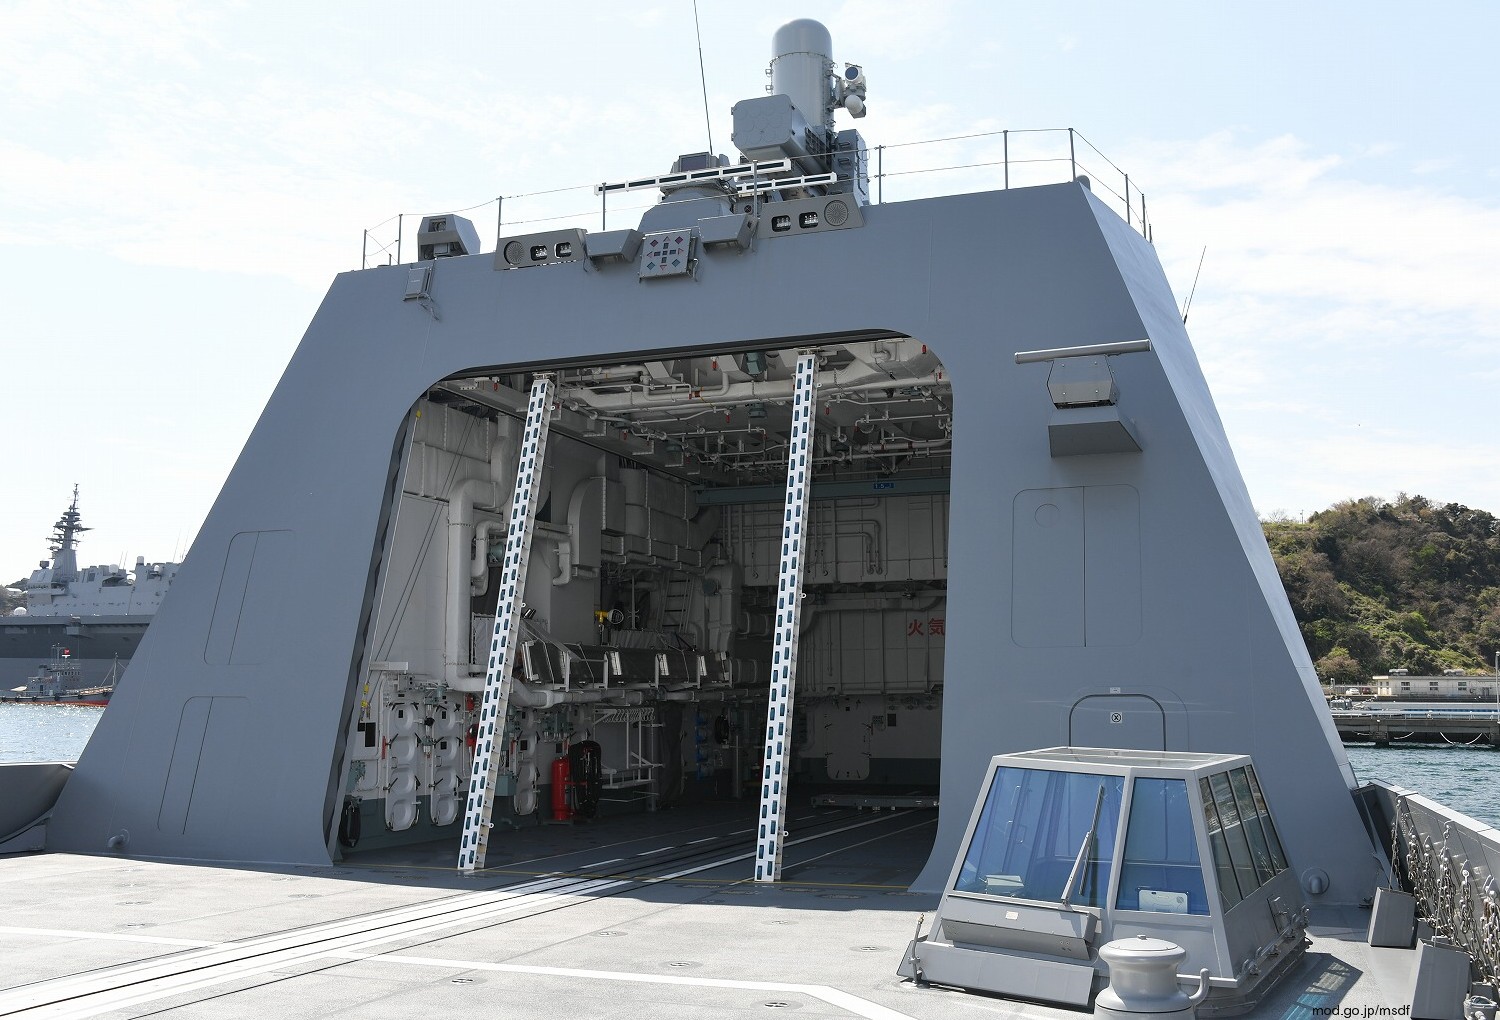 ffm-2 js kumano mogami class frigate multi-mission japan maritime self defense force jmsdf navy 06 helicopter hangar